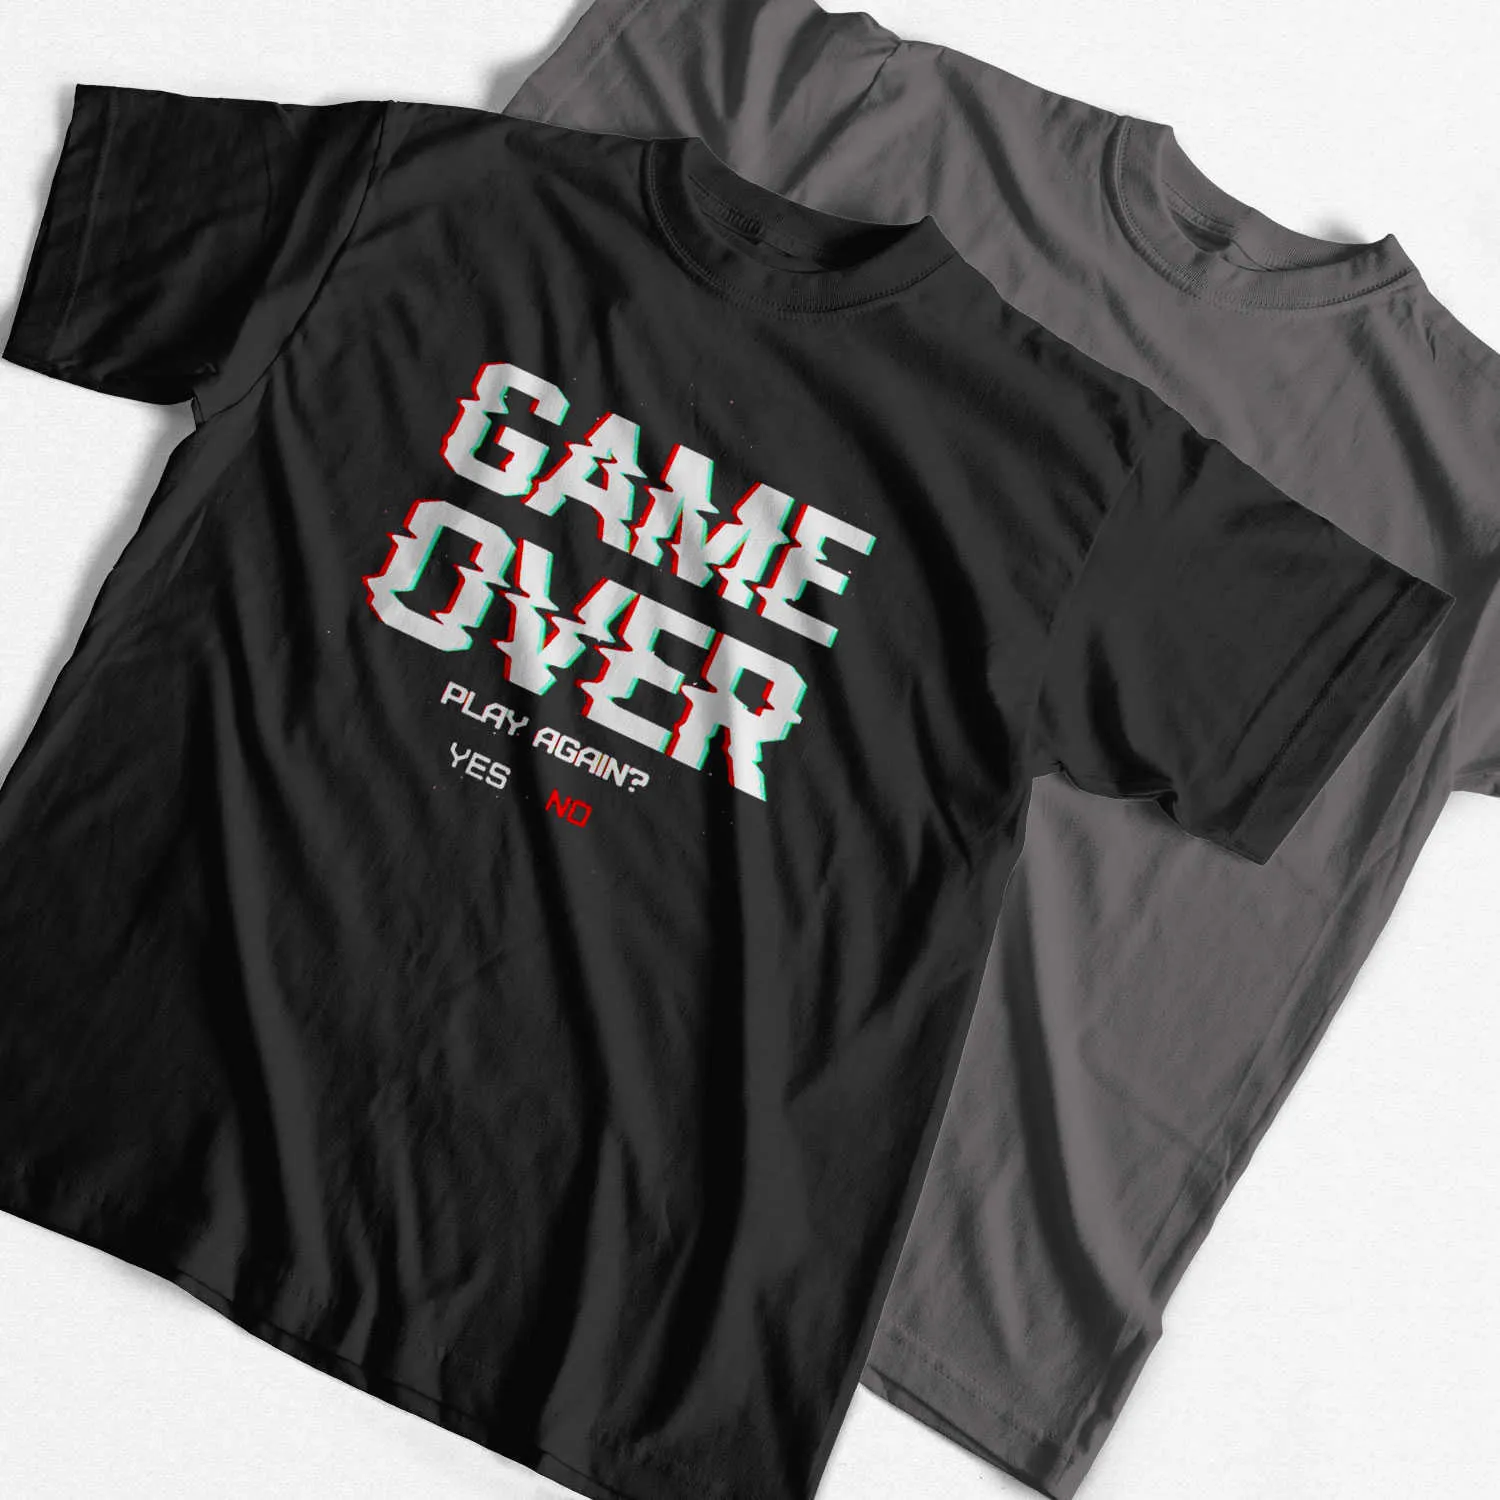 Camisetas para hombre COOLMIND 100% algodón Game Over Print Camiseta para hombre Casual Funny Men Camiseta Cool o-cuello Camiseta de algodón para hombre Camisetas Tops G230309